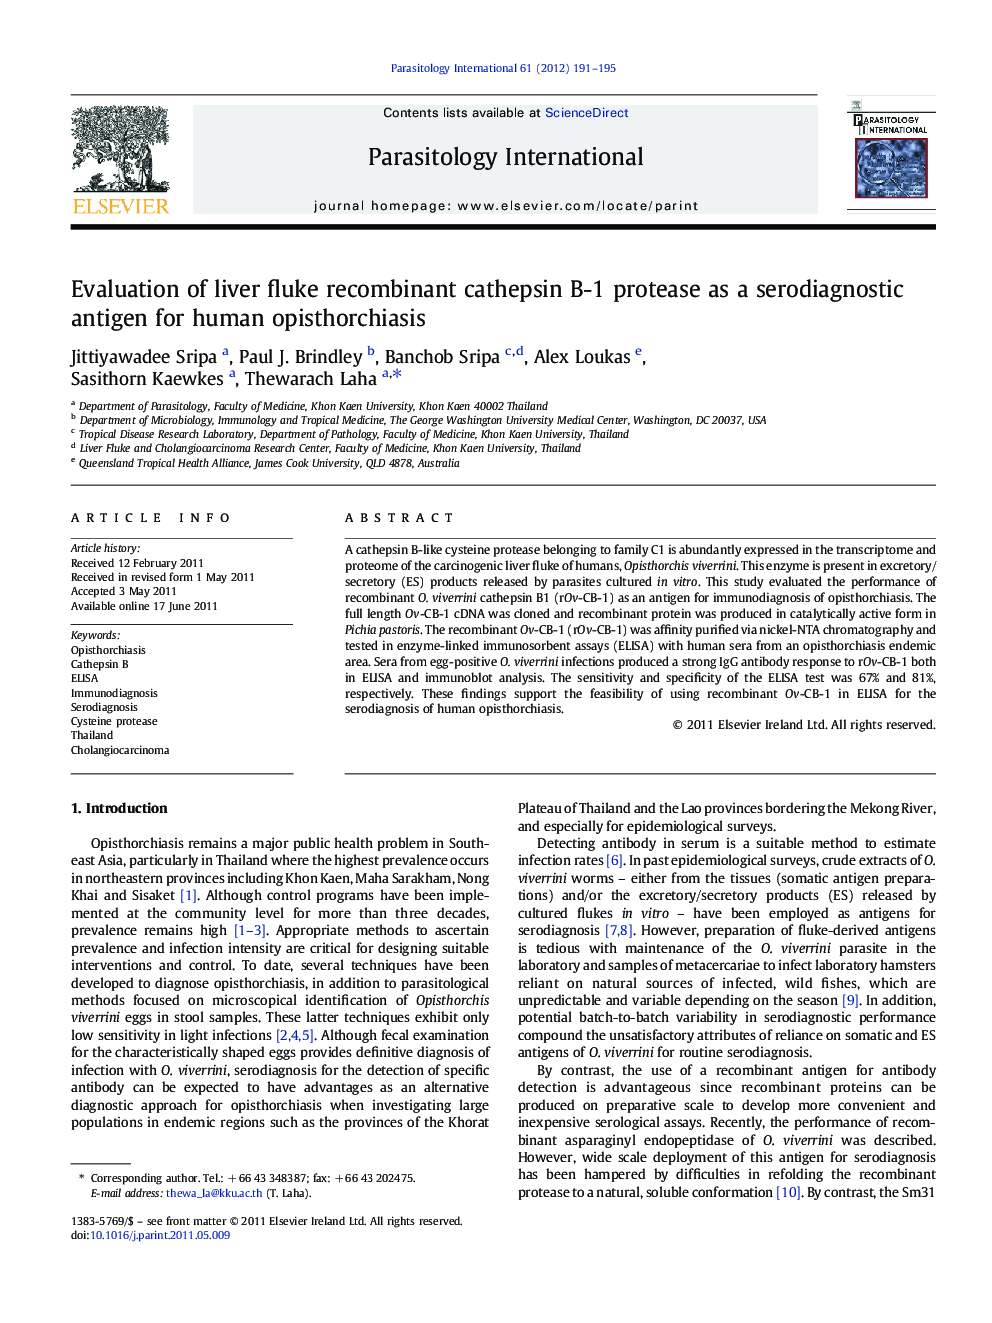 Evaluation of liver fluke recombinant cathepsin B-1 protease as a serodiagnostic antigen for human opisthorchiasis